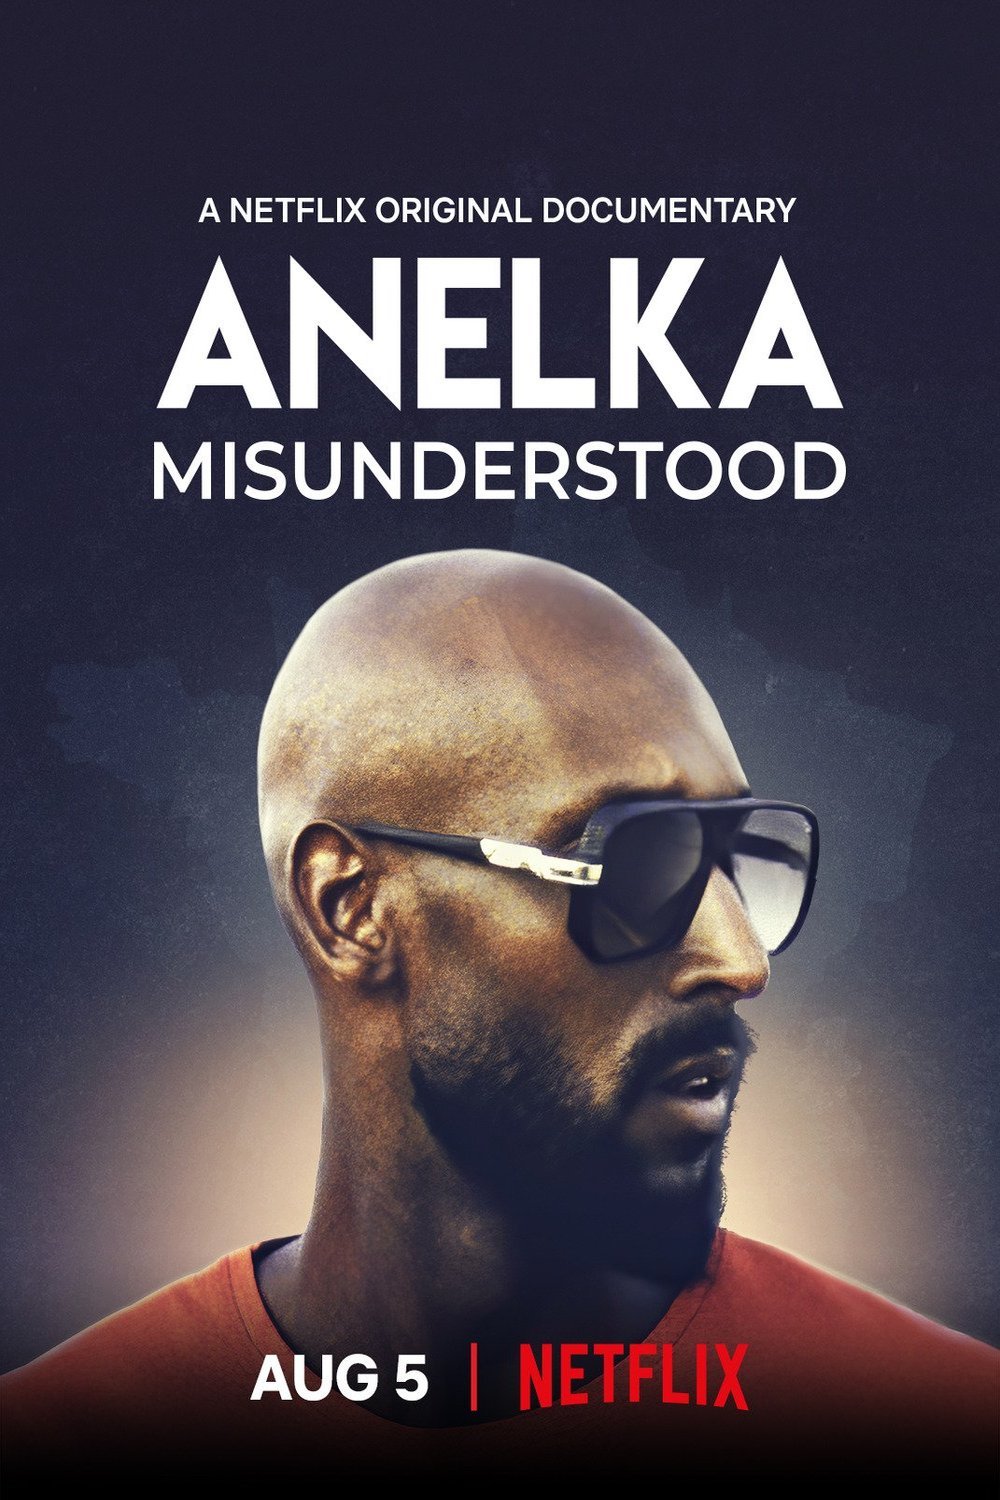 Poster of the movie Anelka: Misunderstood